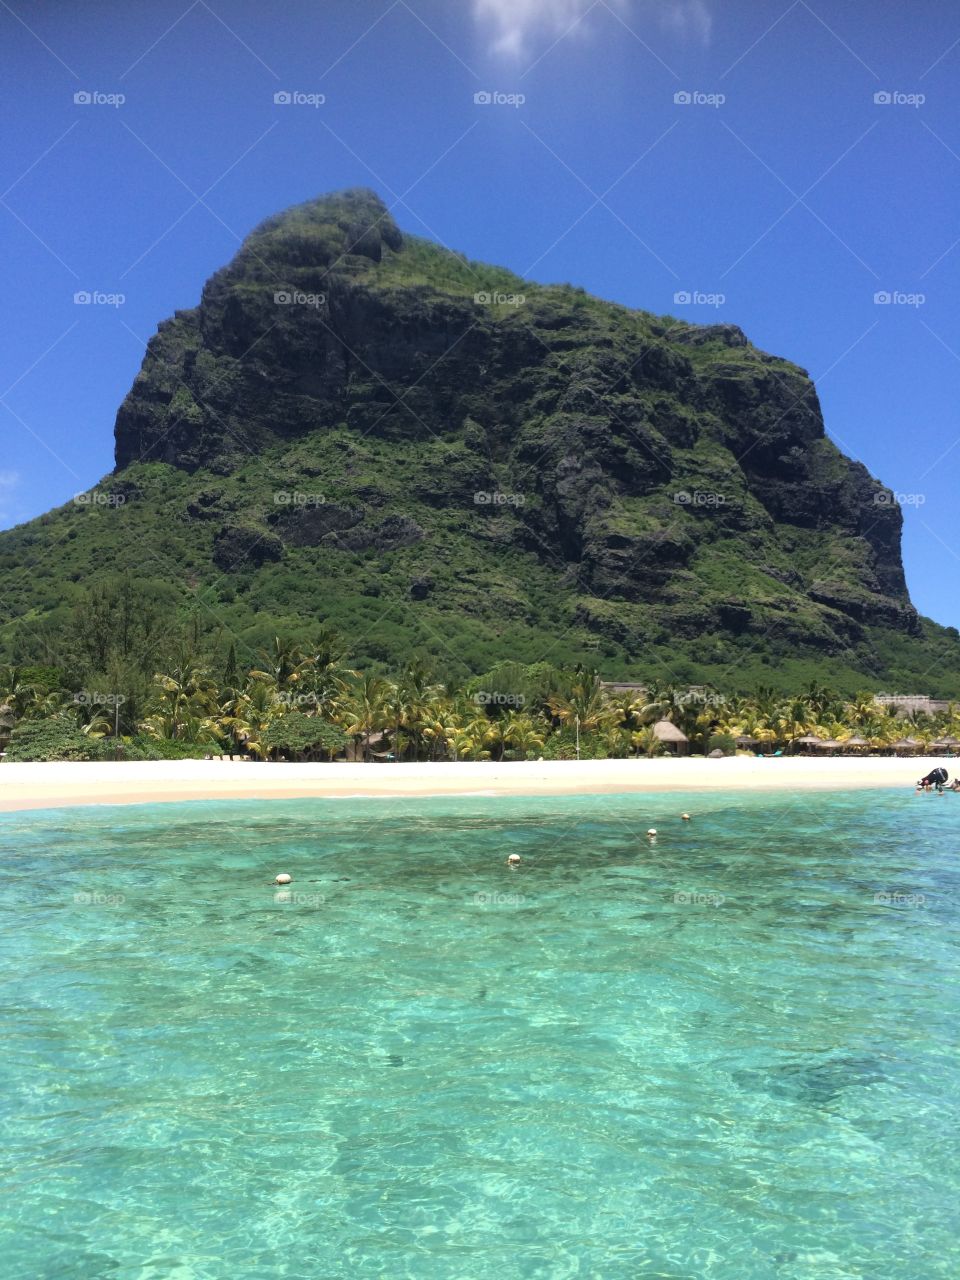 Mauritius beach mountain